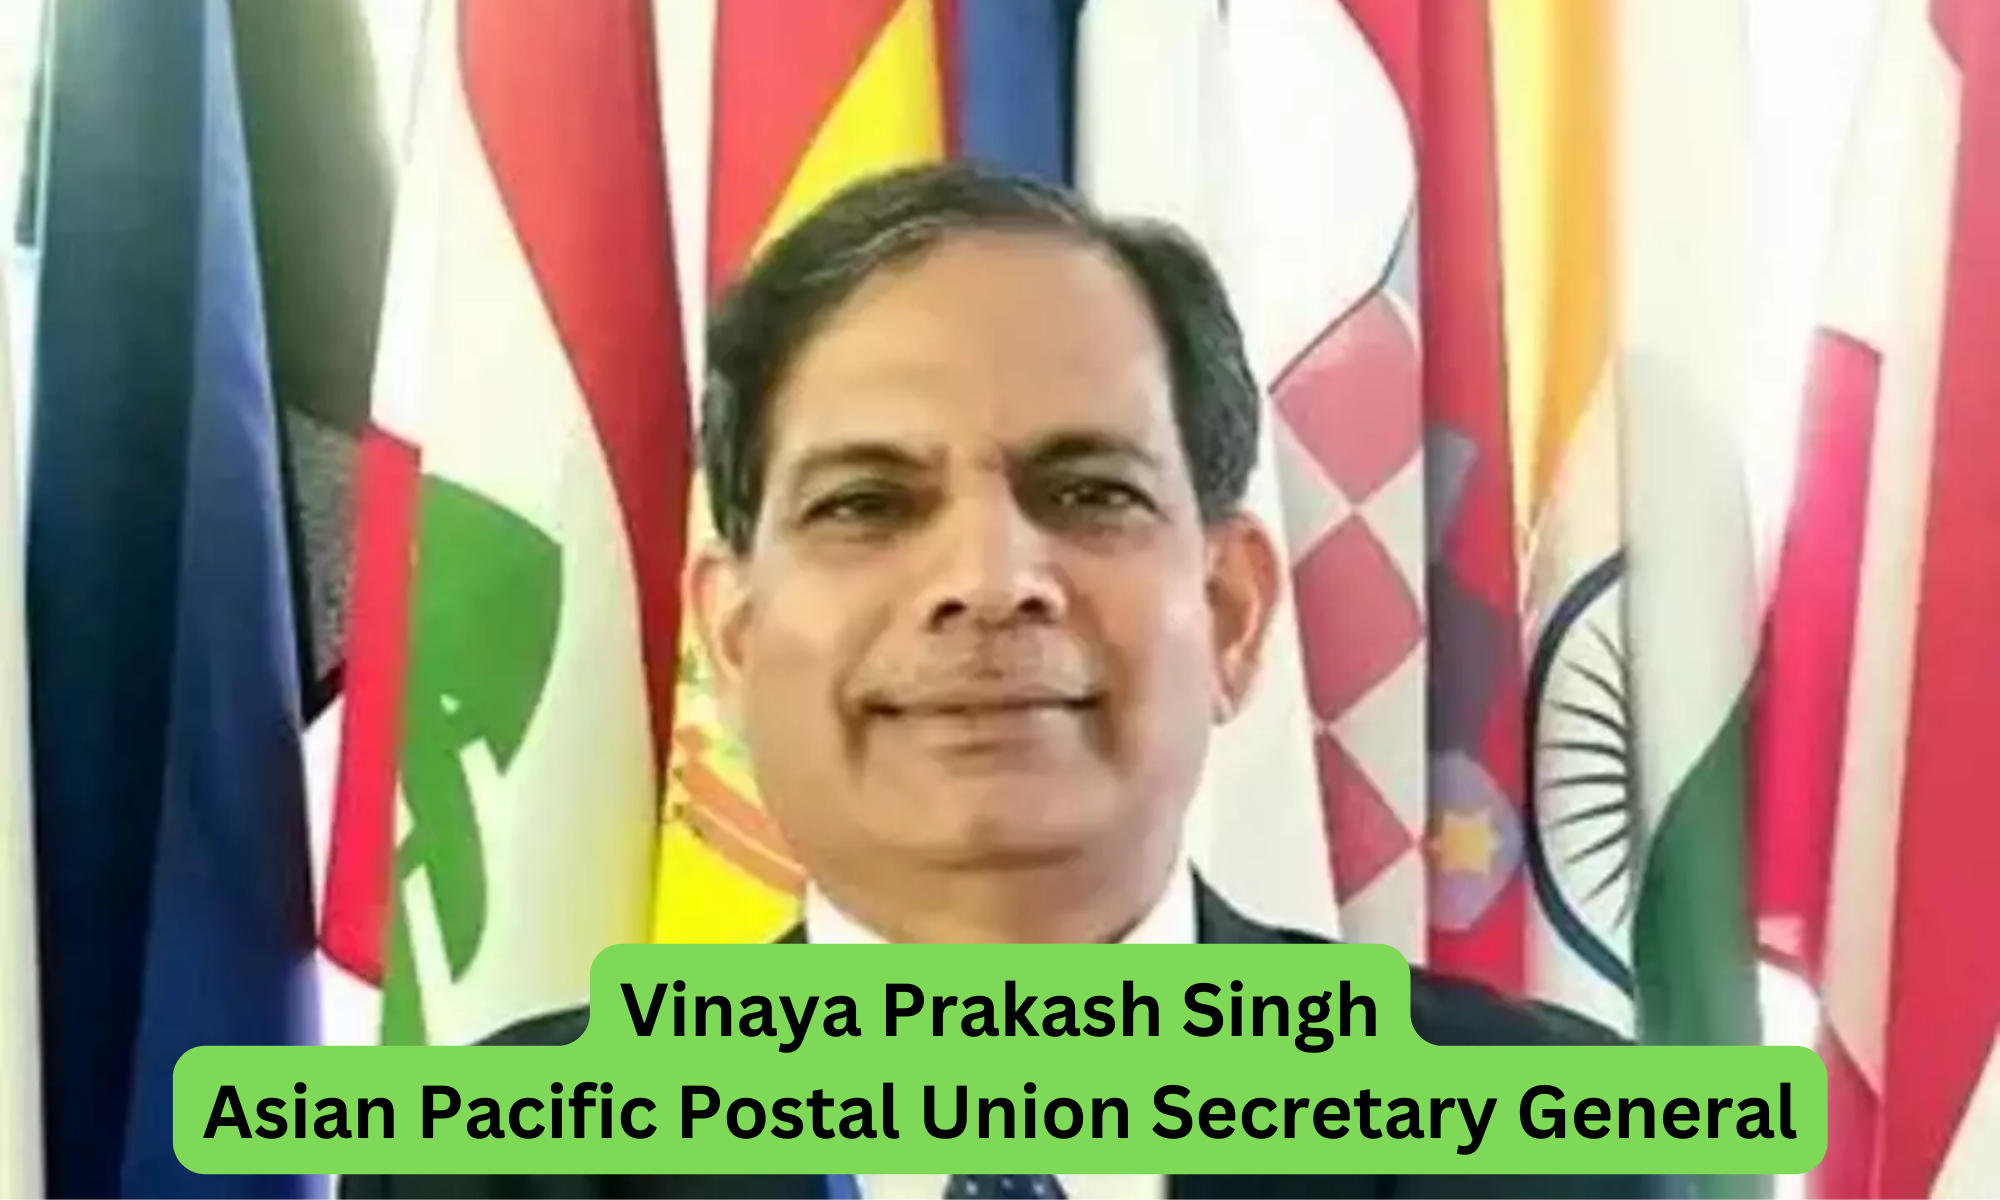 Vinaya Prakash Singh: New Asian Pacific Postal Union Secretary General